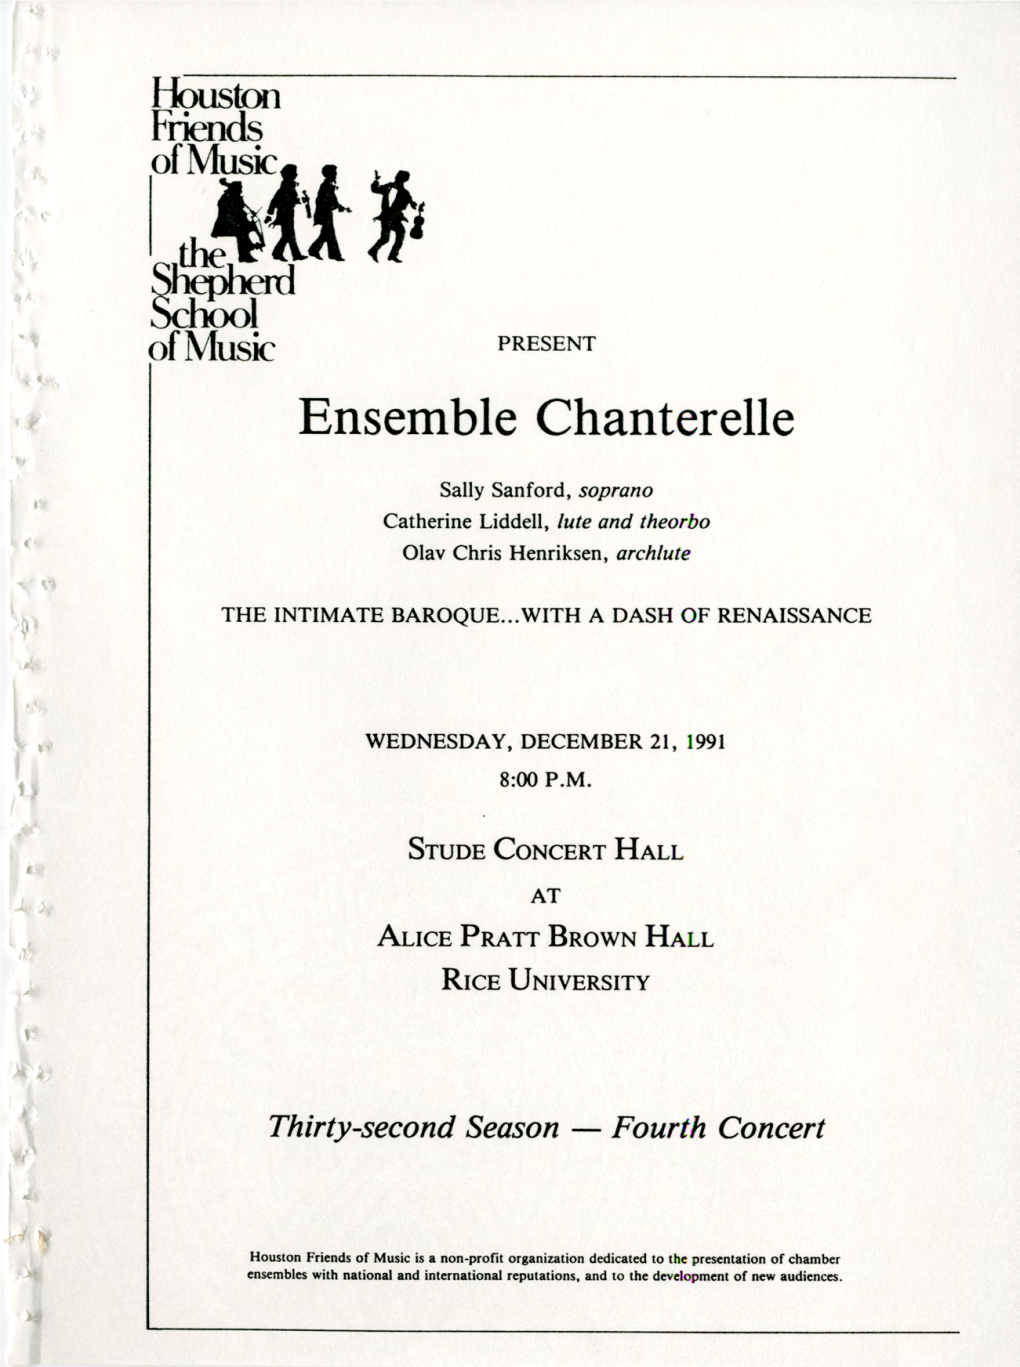 The~~'All1 ~ of Music PRESENT Ensemble Chanterelle